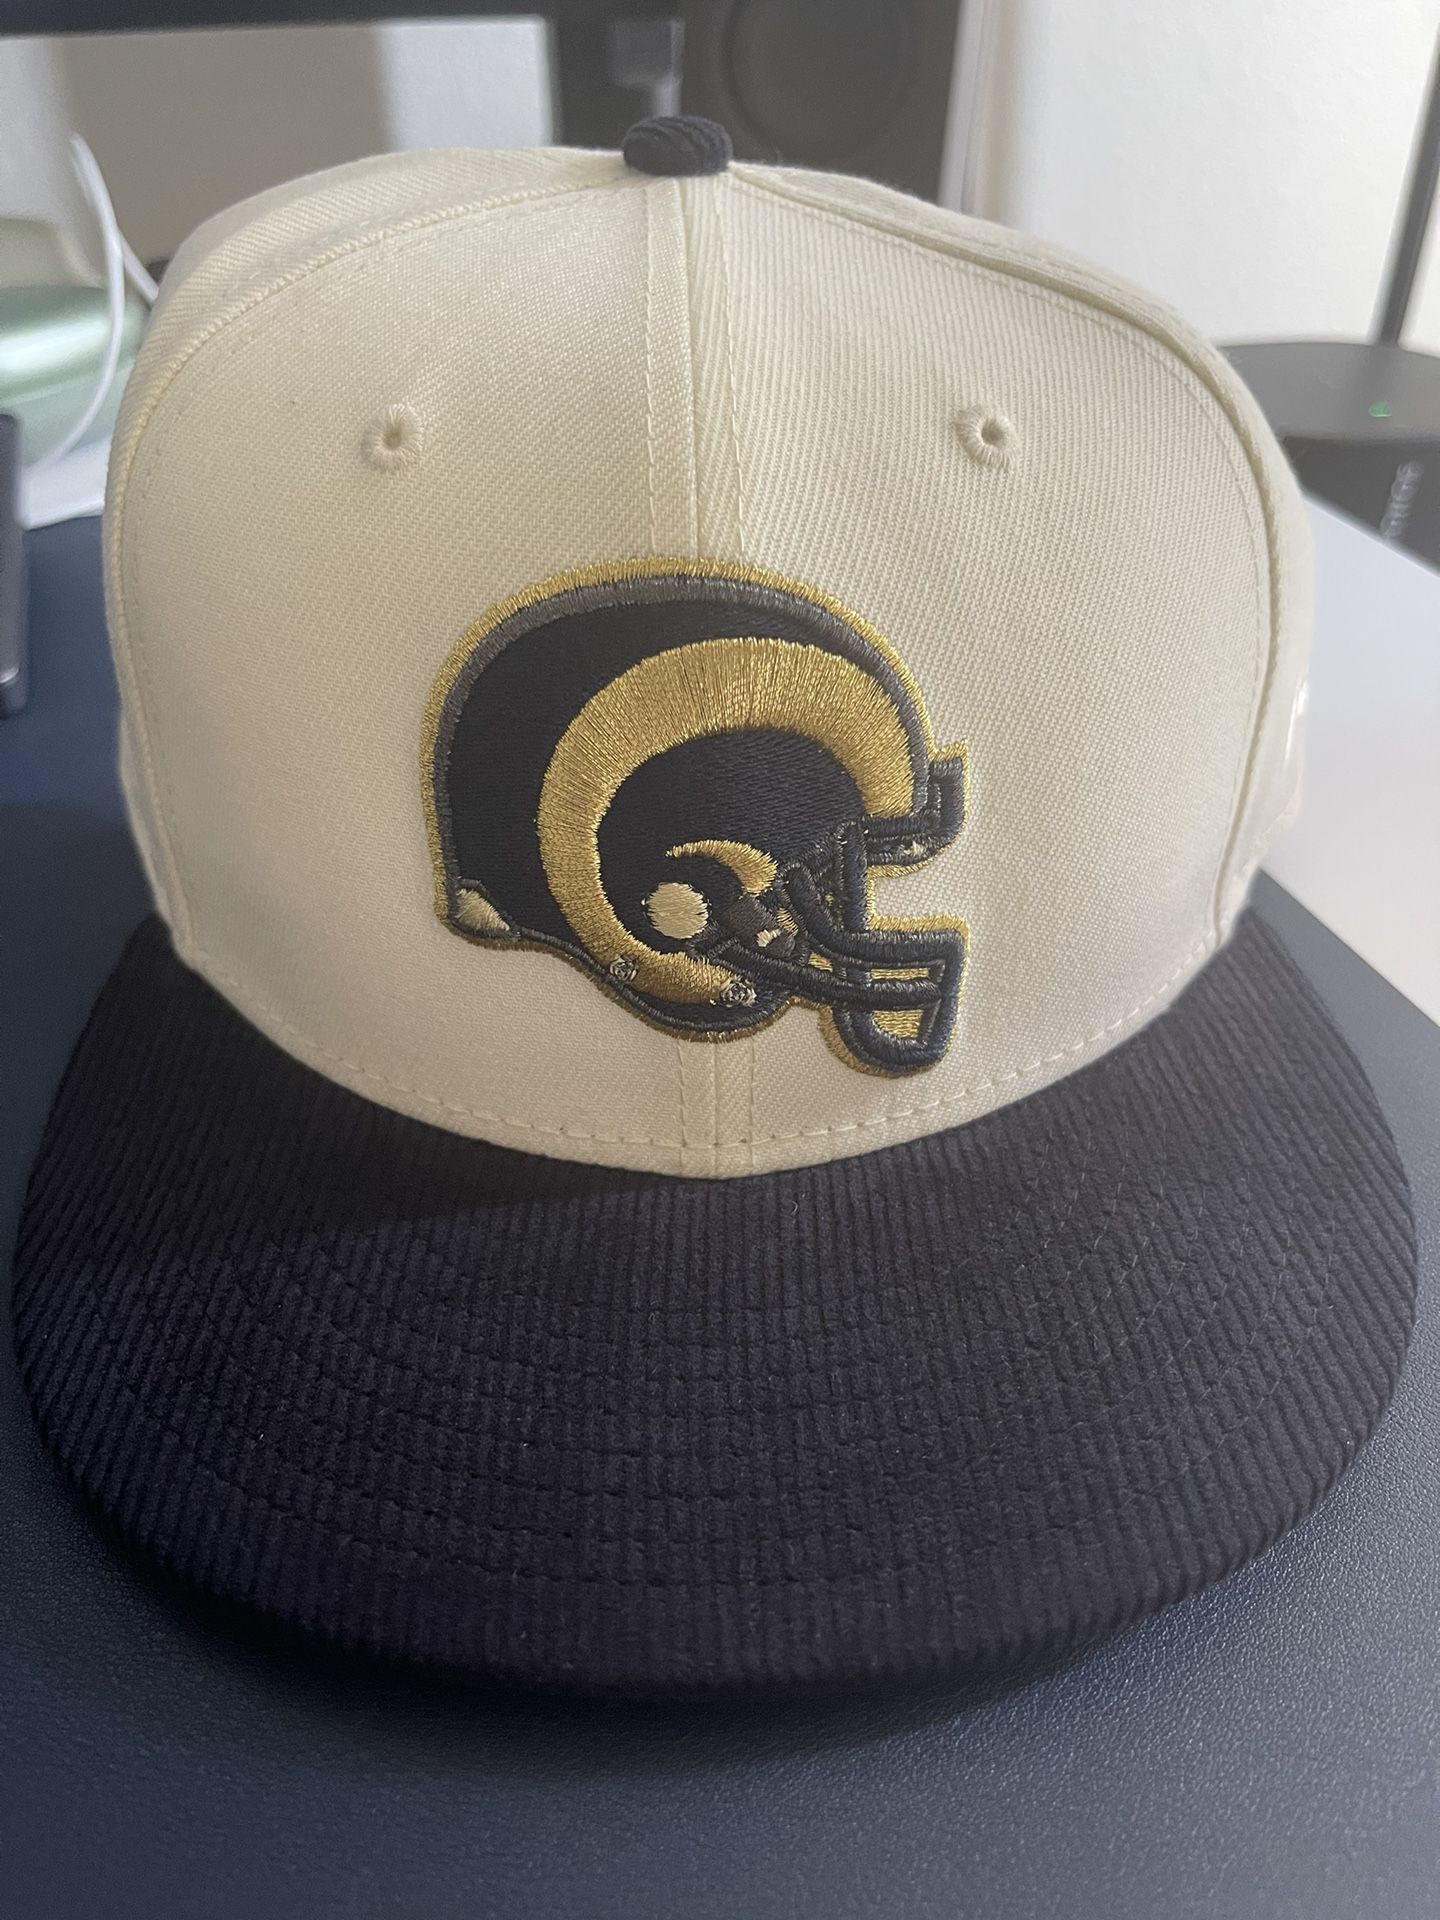 St Louis Rams hard hat